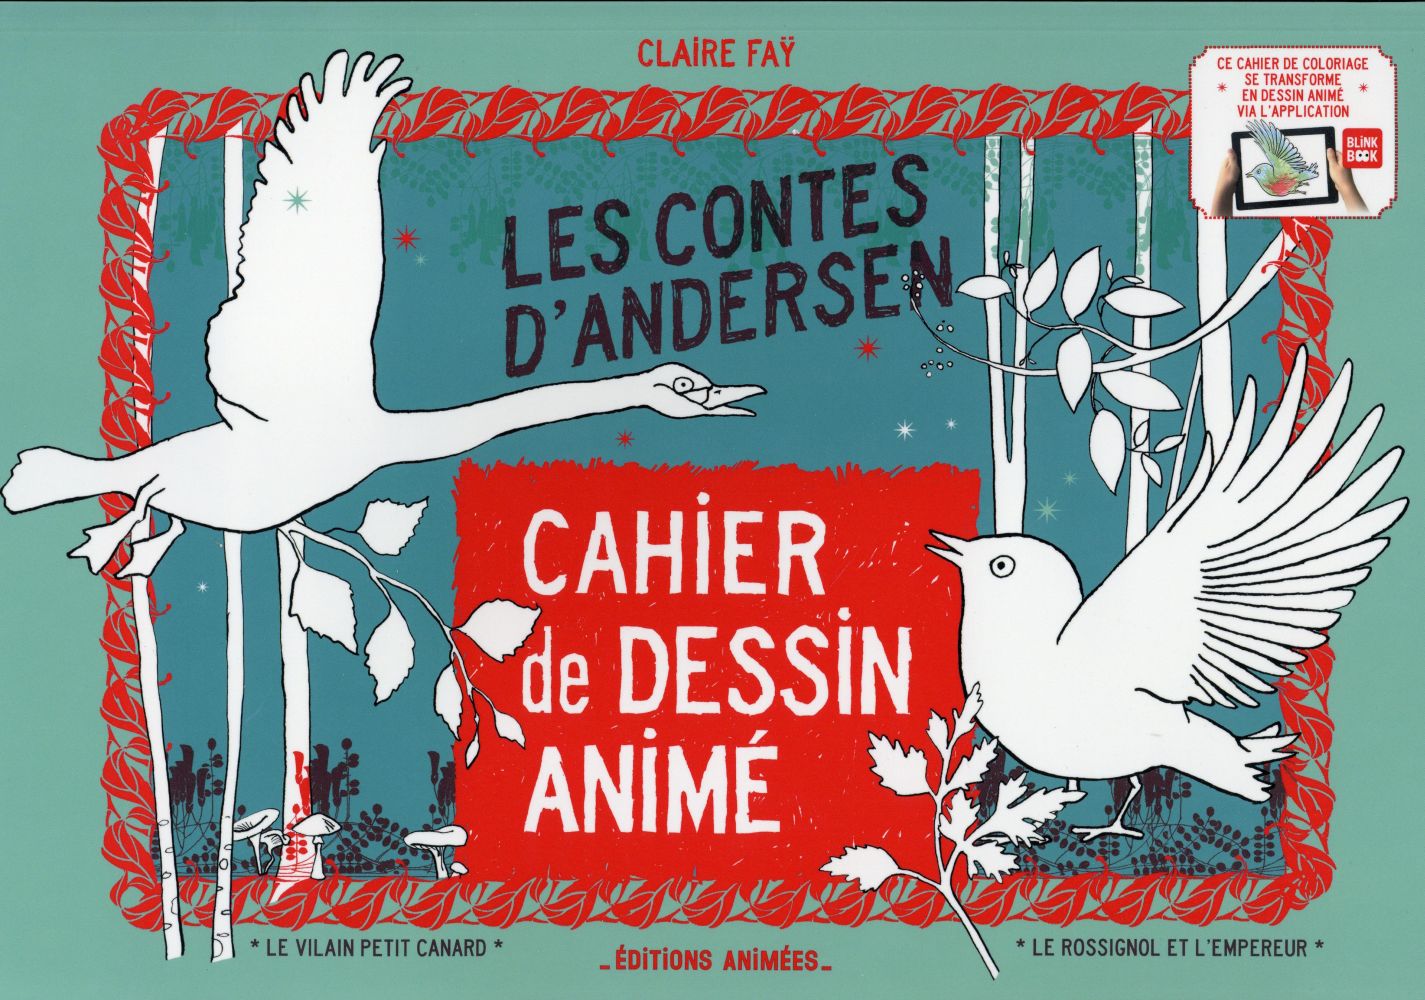 CAHIER DE DESSIN ANIME - LES CONTES D'ANDERSEN